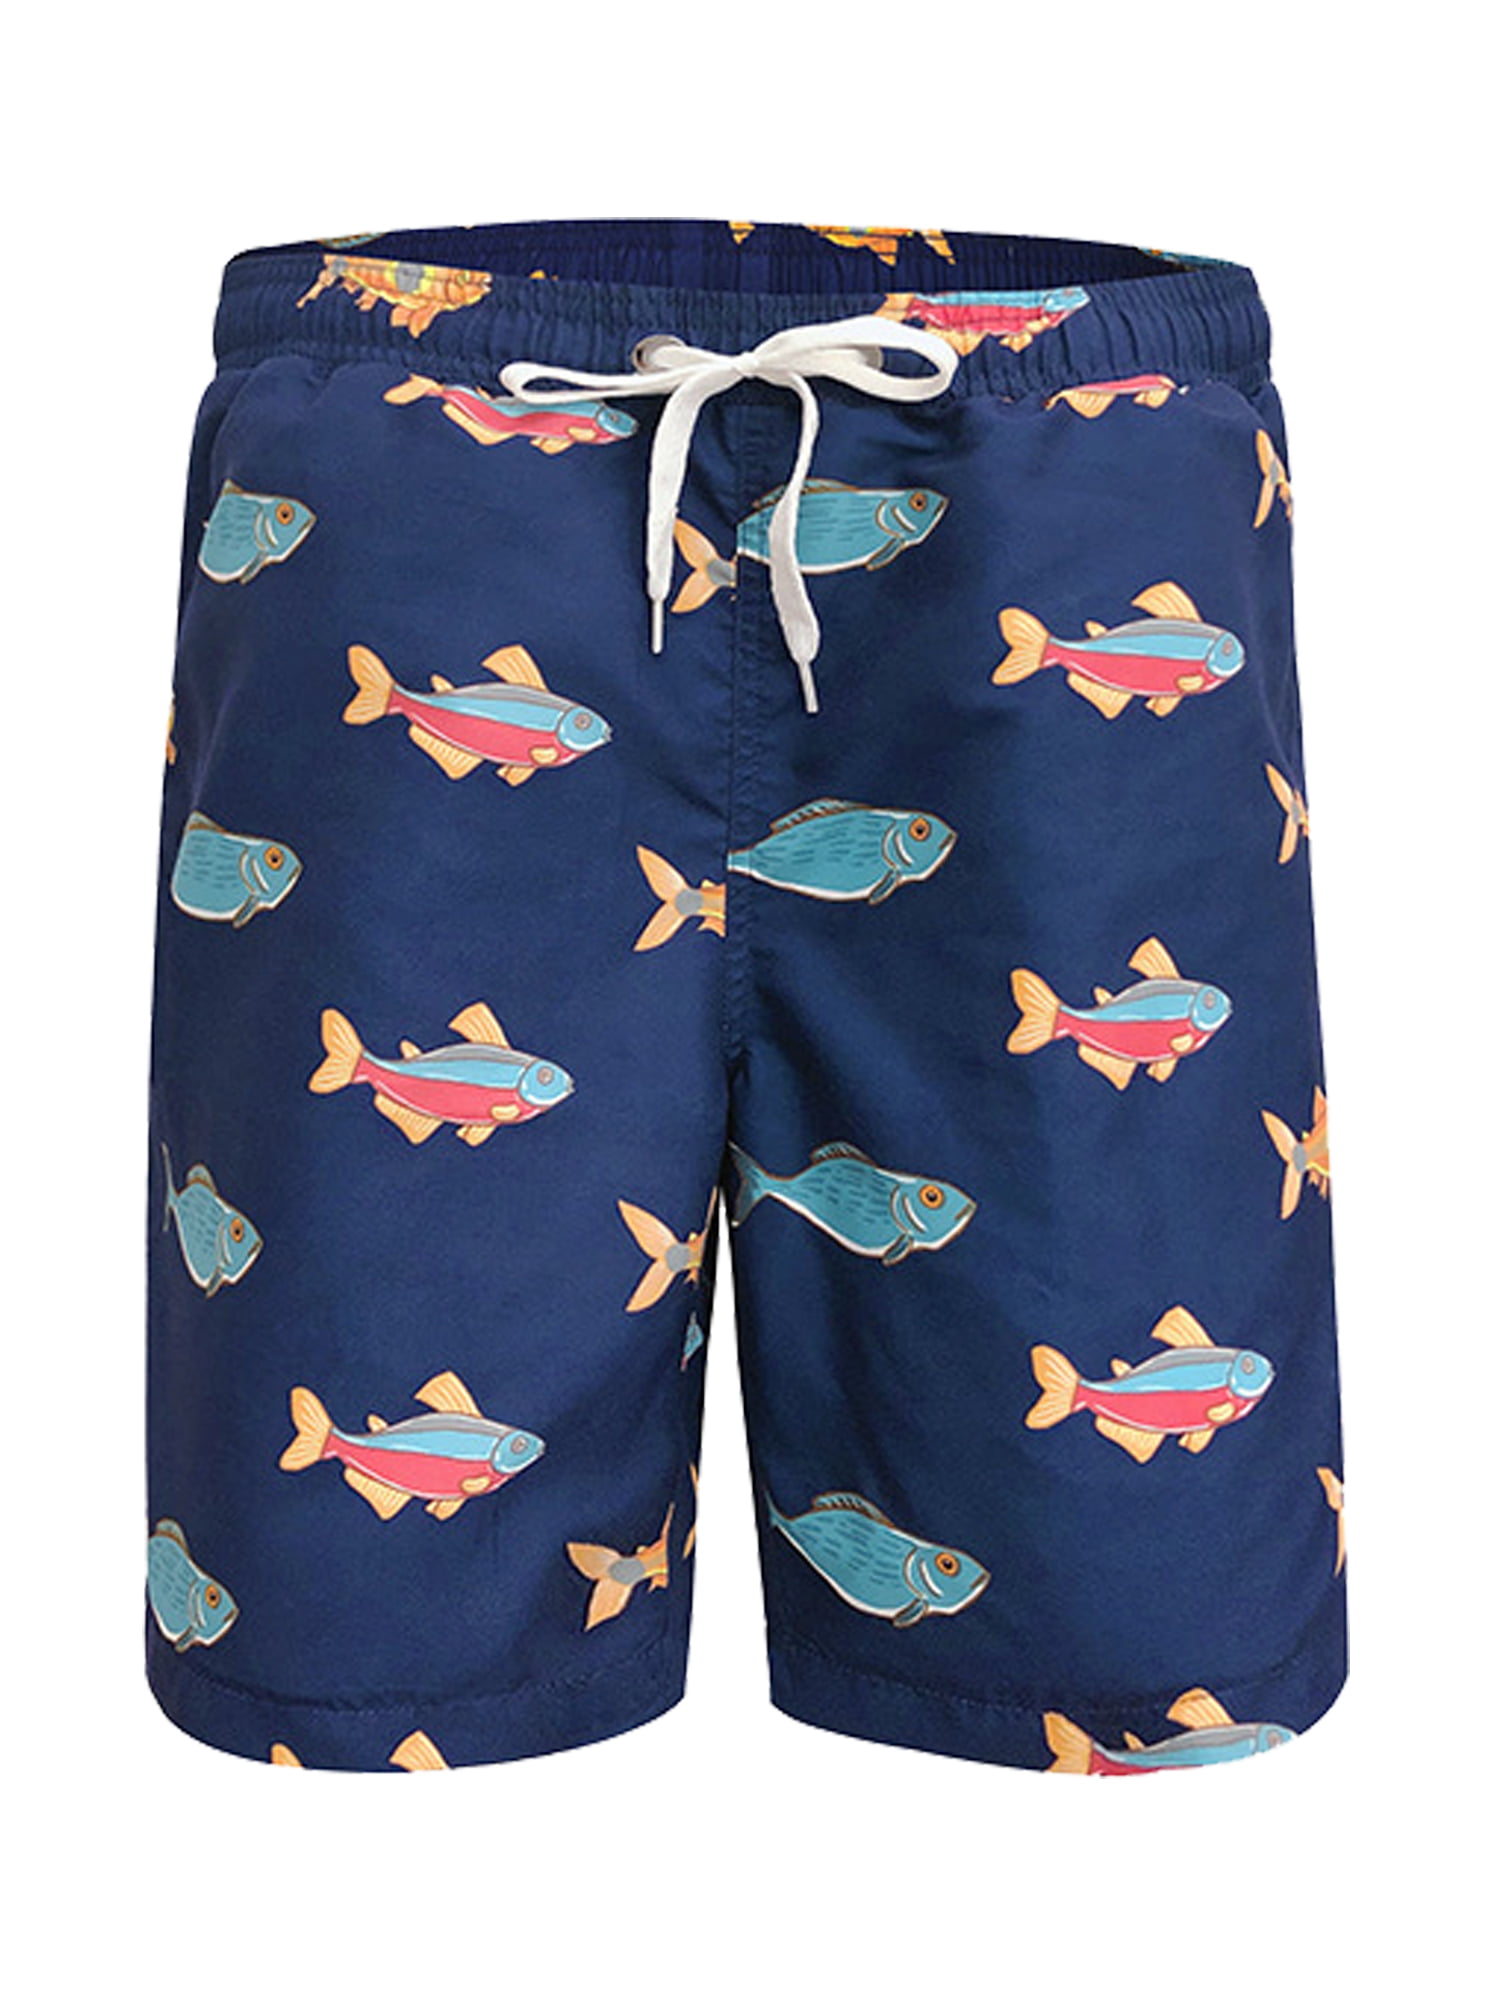 One Nice Mens 3D Swim Trunks Quick Dry Summer Underwear Surf Beach Shorts Elastic Waist with Pocket Drawstring 